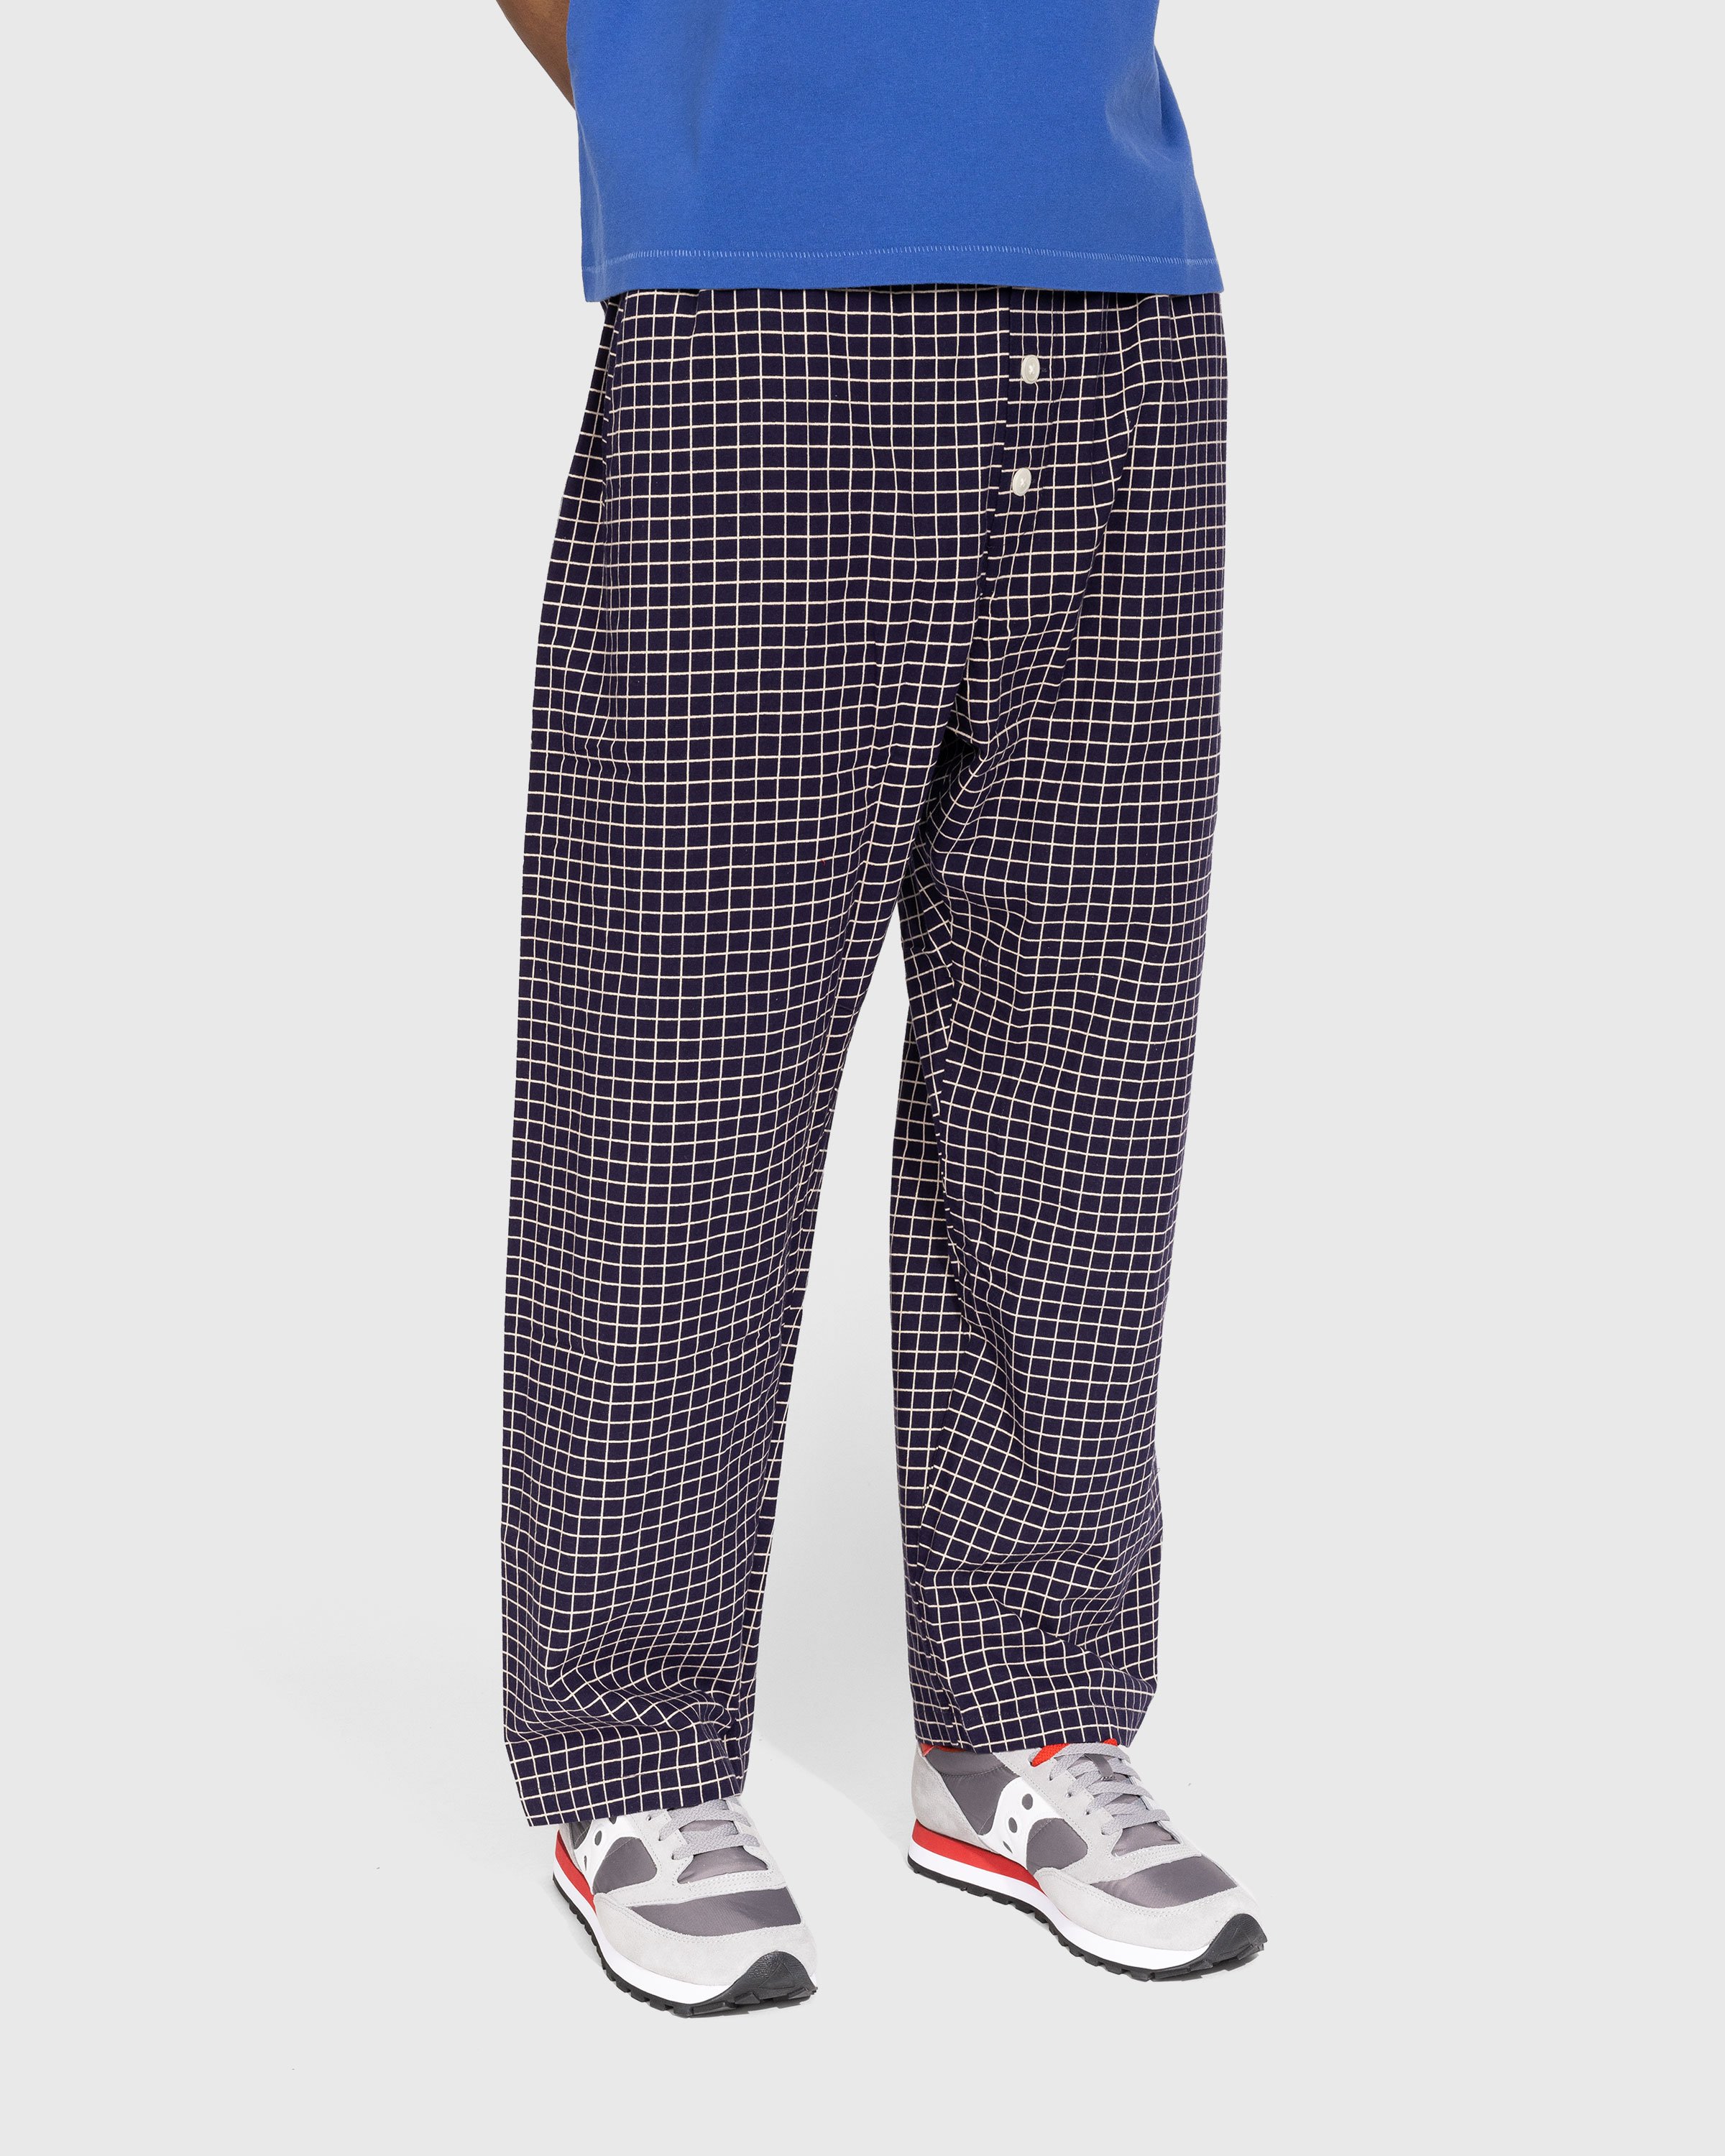 Bode - Midnight Grid Pajama Pant - Clothing - Blue - Image 4